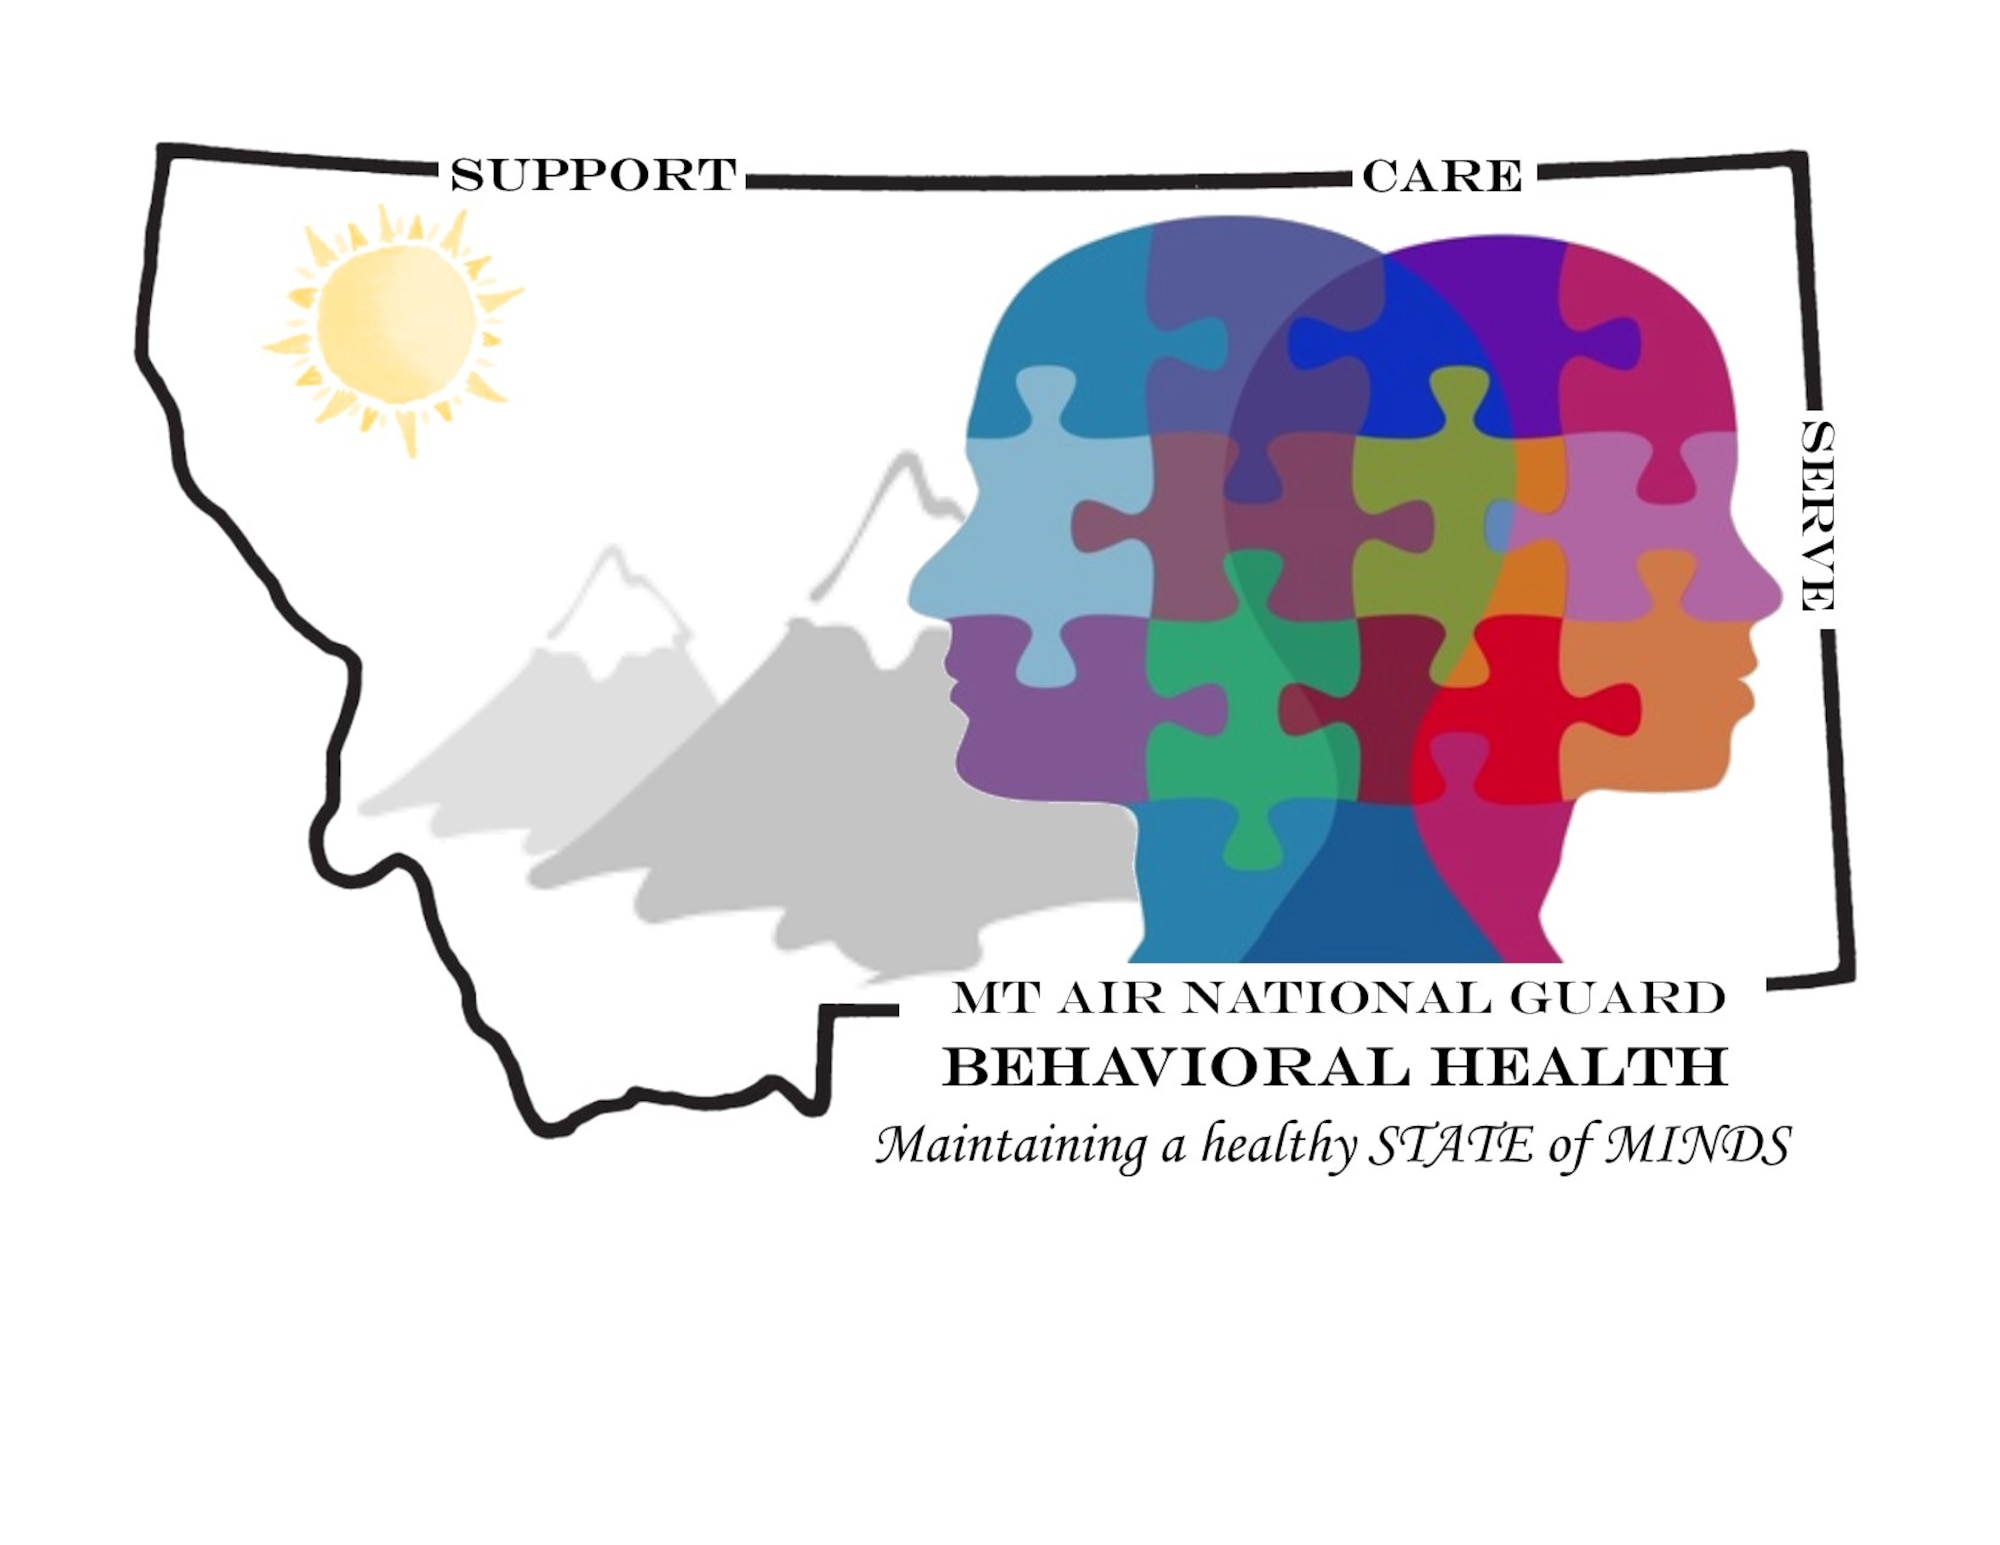 The logo for the Montana Air National Guard Behavioral Health Program.